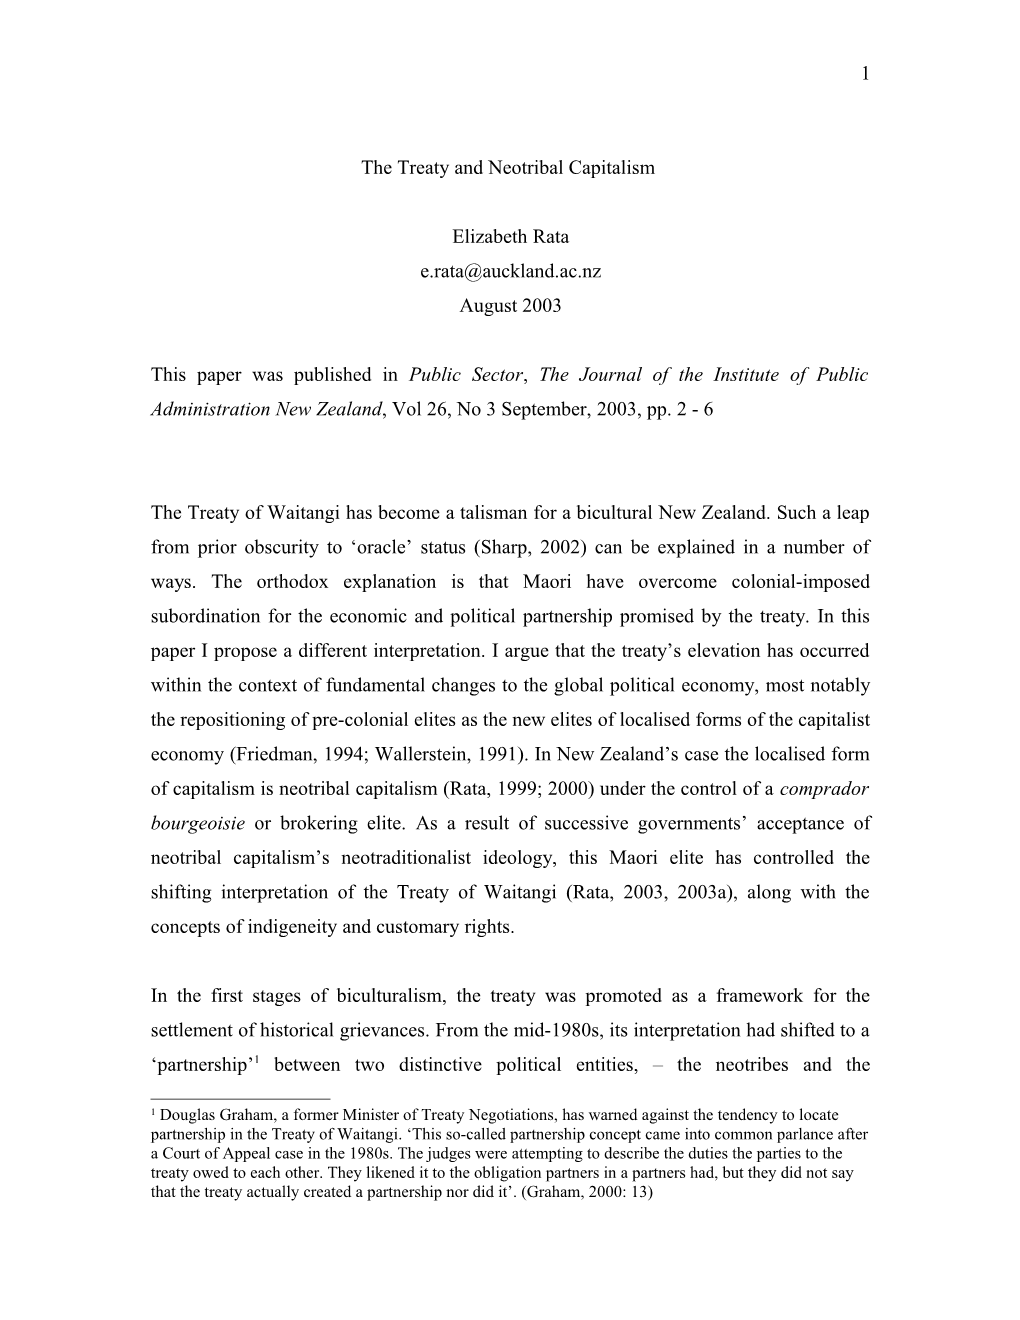 The Treaty of Waitangi, Neotribal Capitalism and Democracy